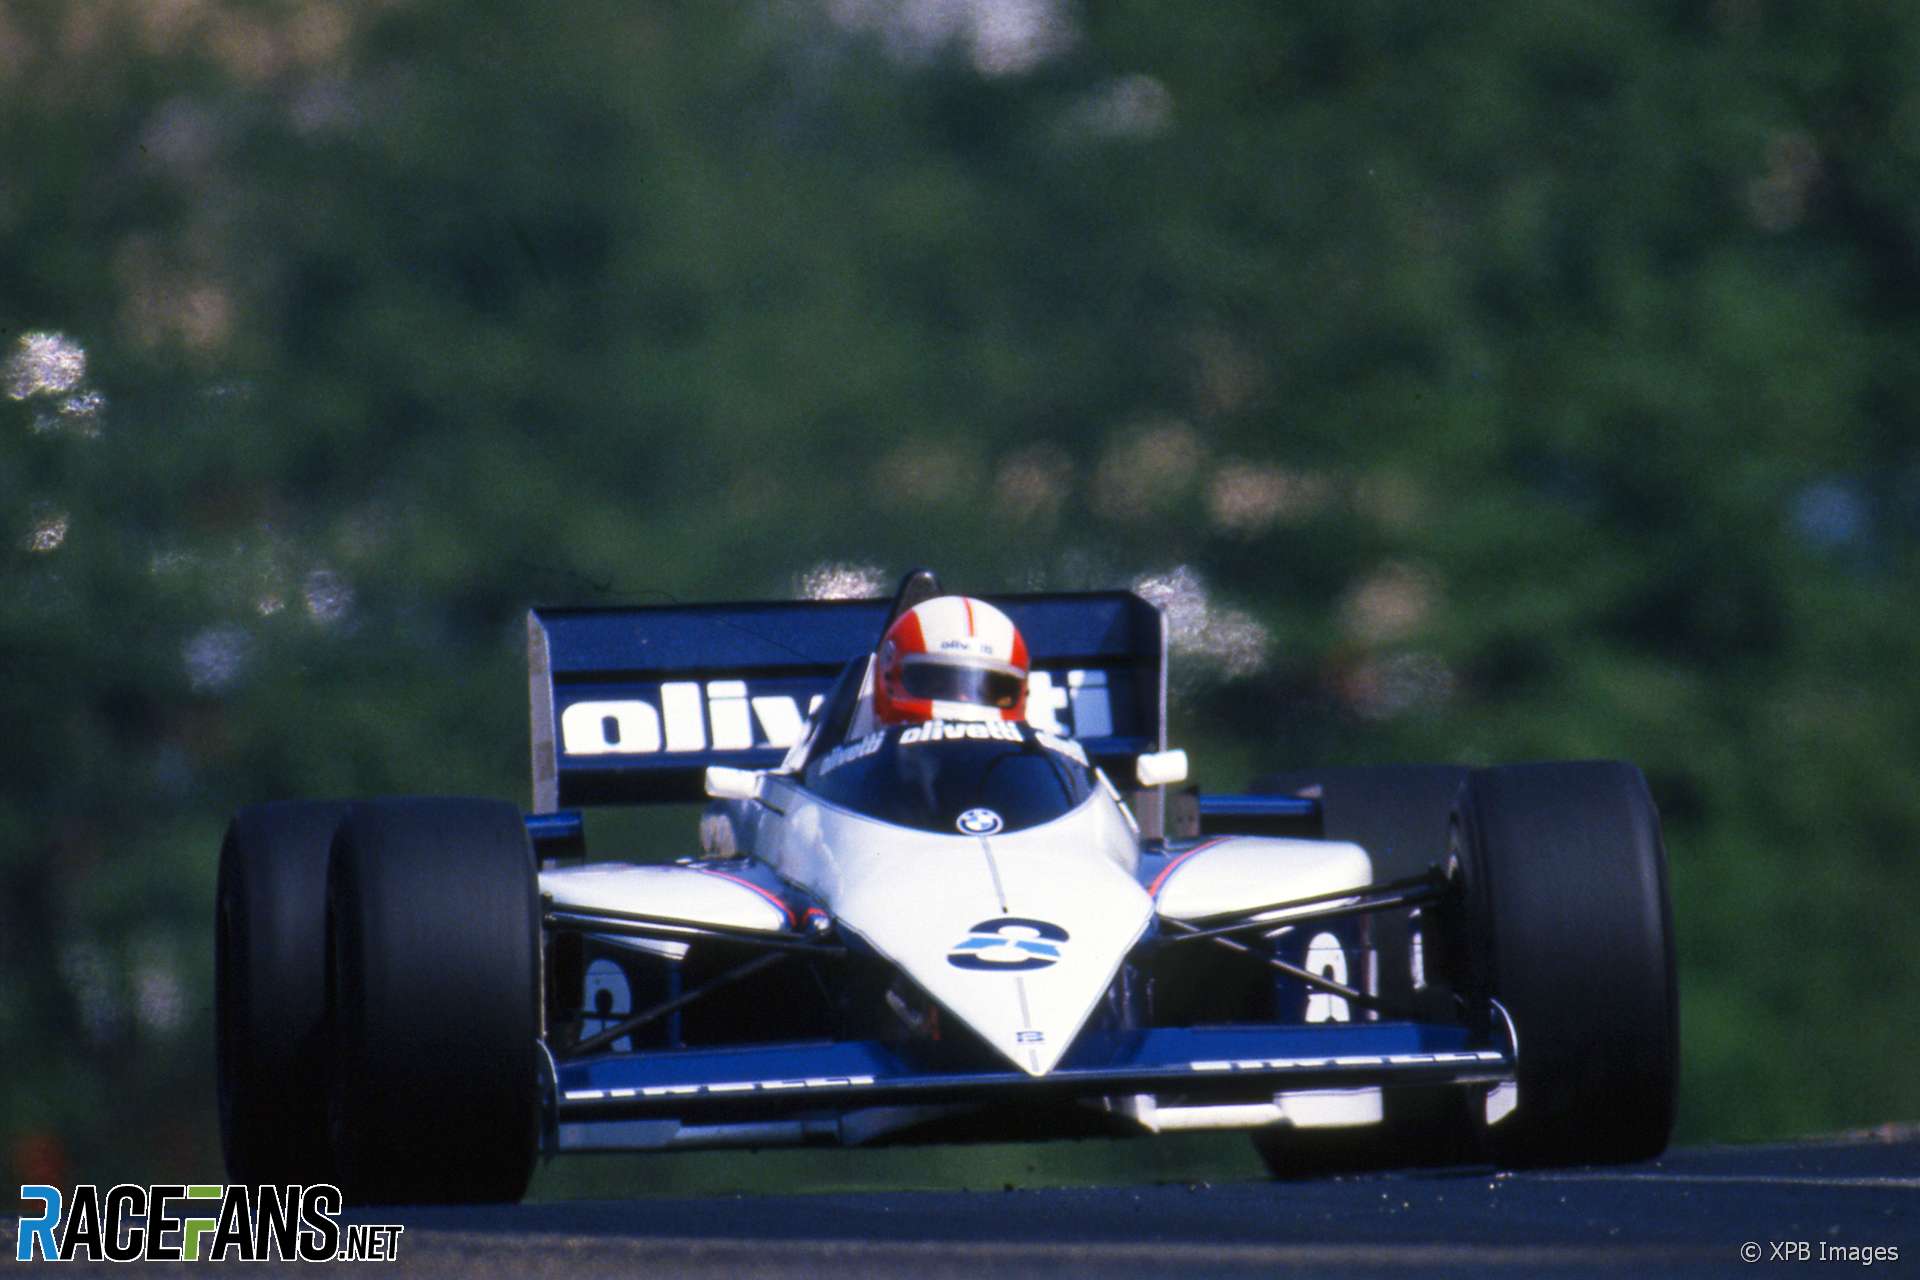 Marc Surer, Spa, Brabham-BMW, 1985